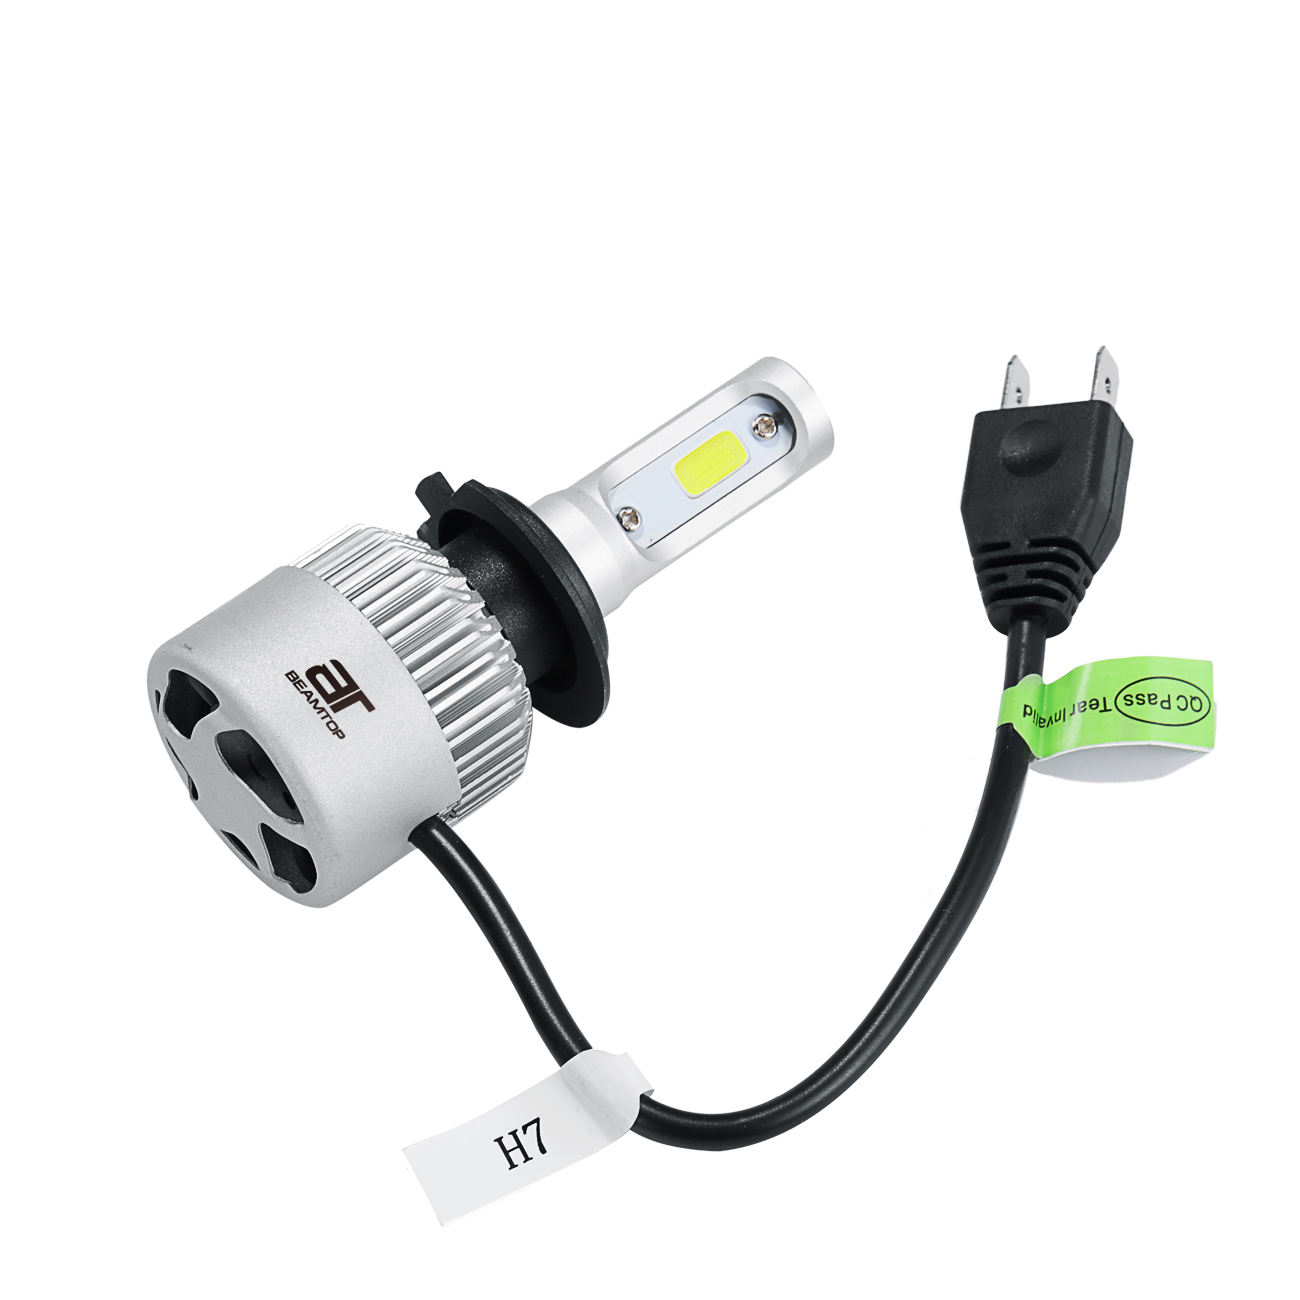 KIT CONVERSIONE A LED CANBUS, LAMPADE BI-LED ATTACCO H7, 36W 12V - 8000LM  (kit) - VENTILATO